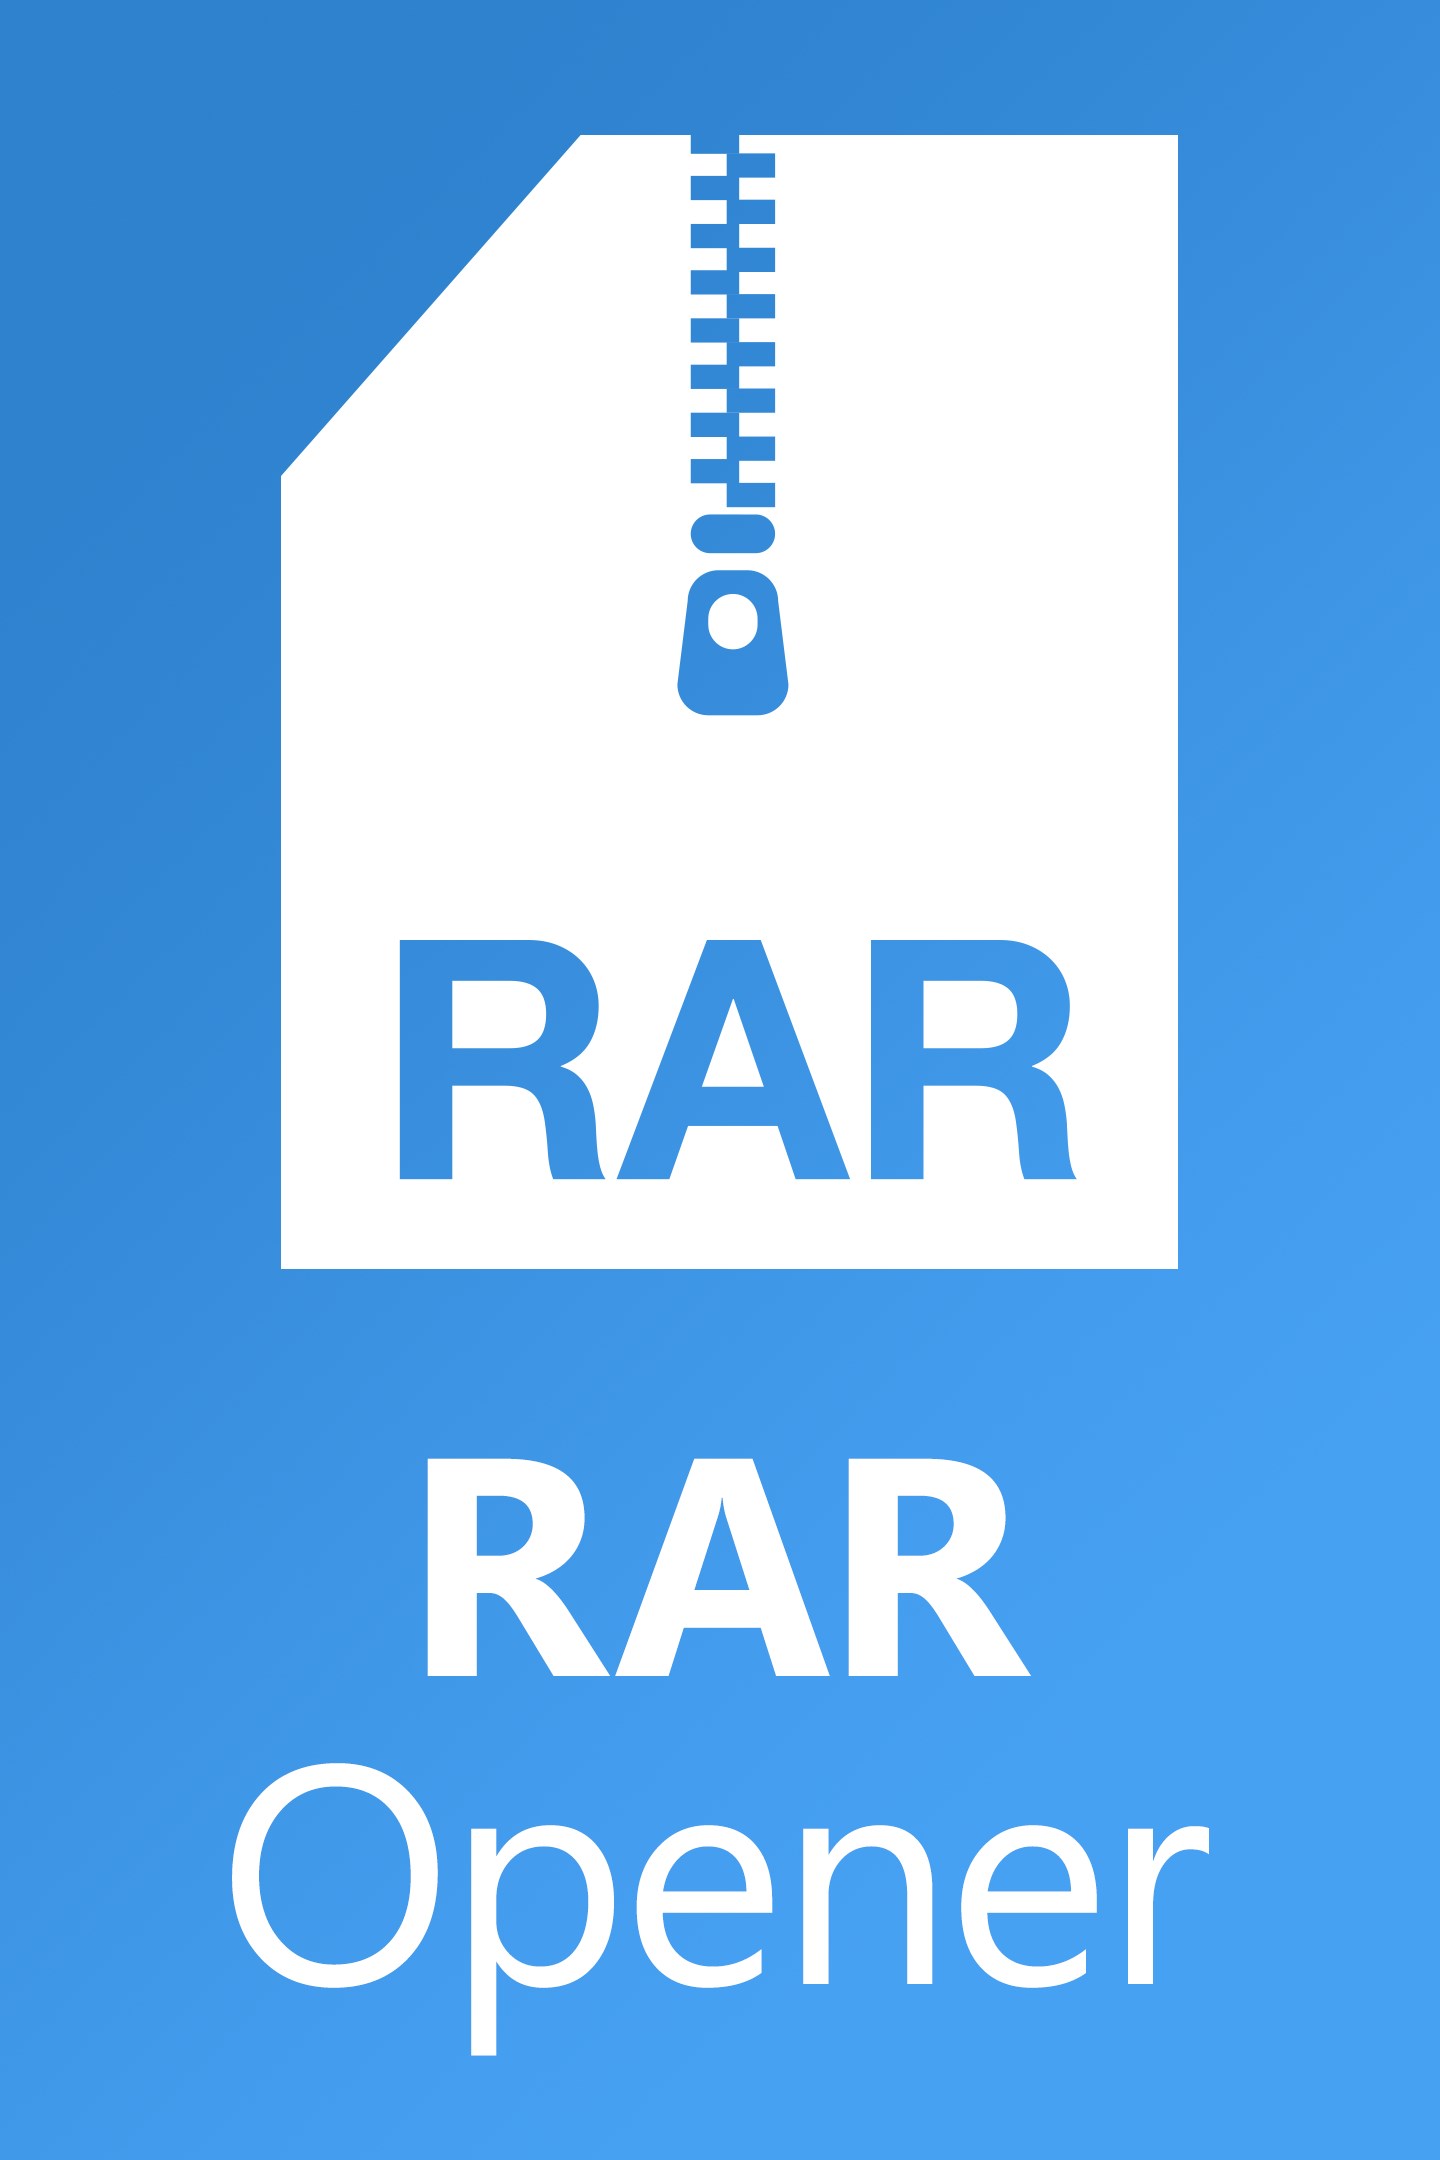 extracting rar files on windows 10